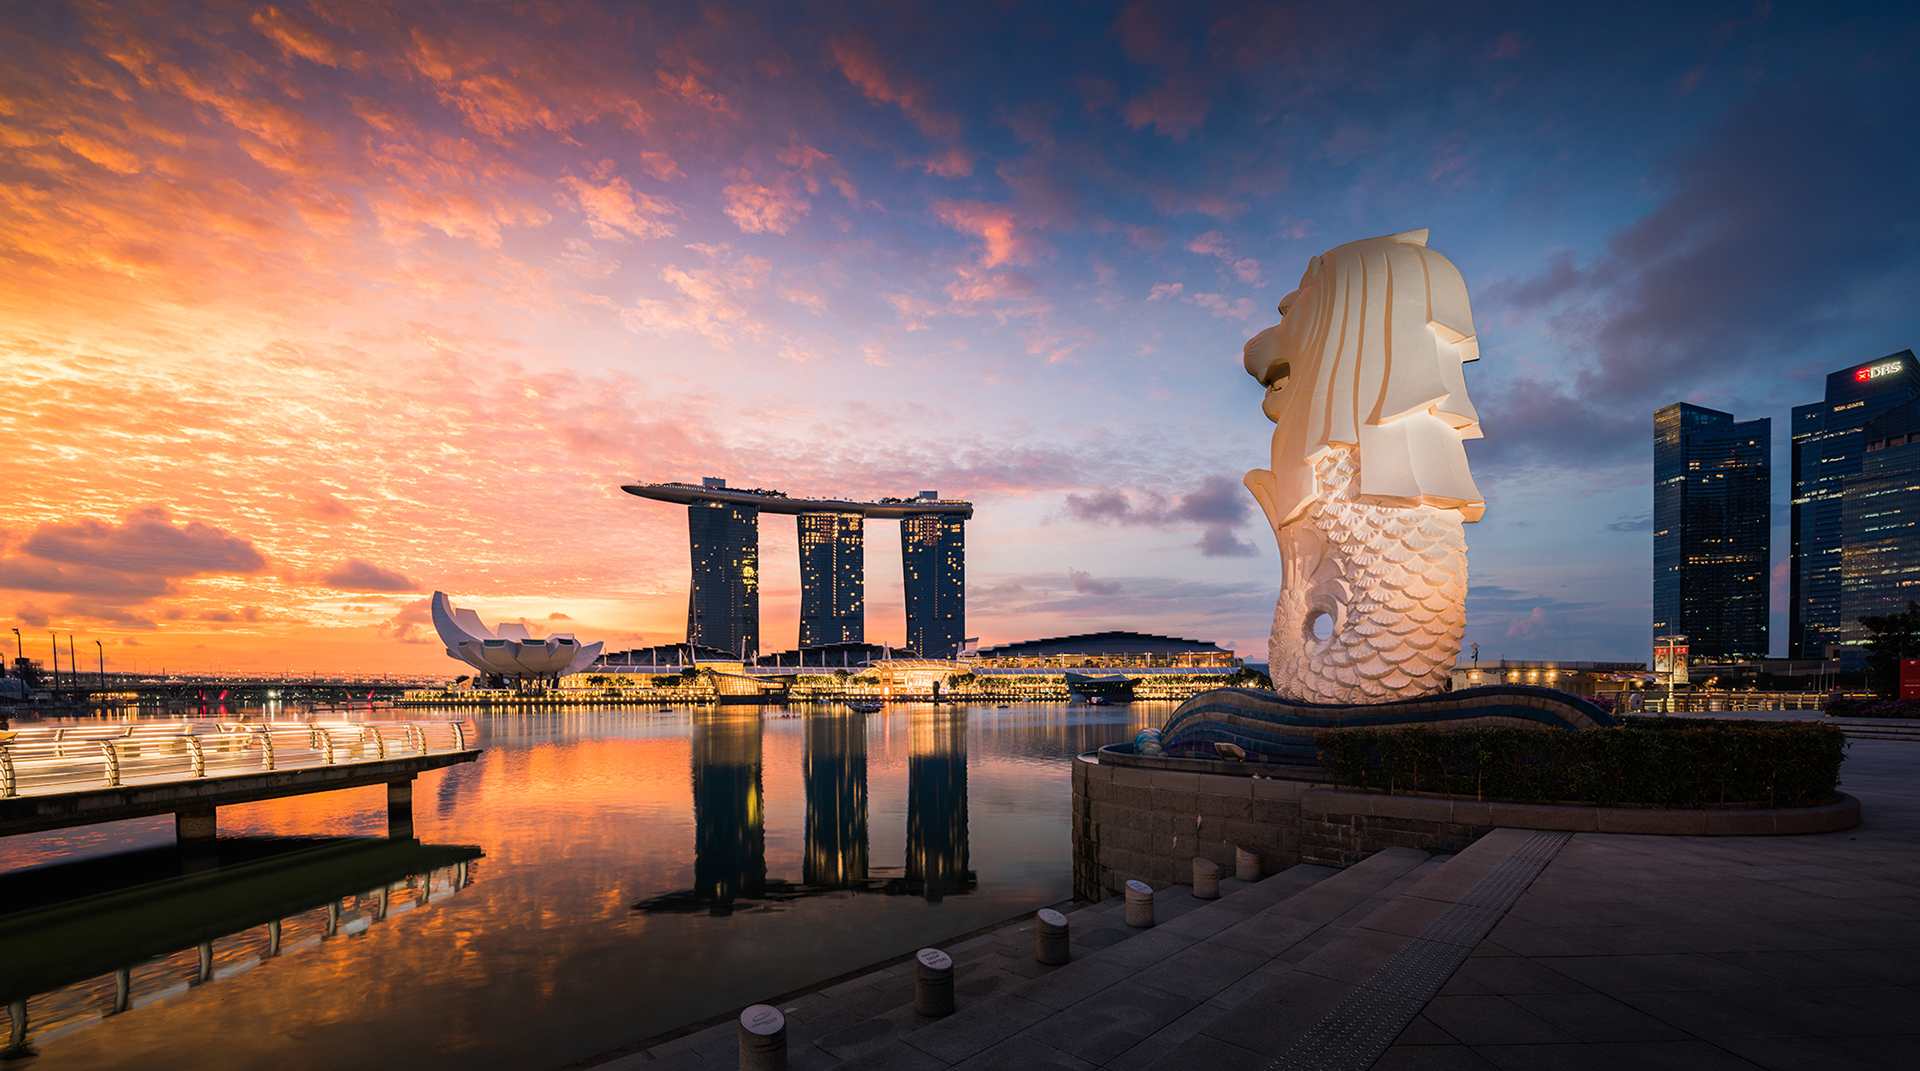 Photography: Exploring Singapore Day & Night 